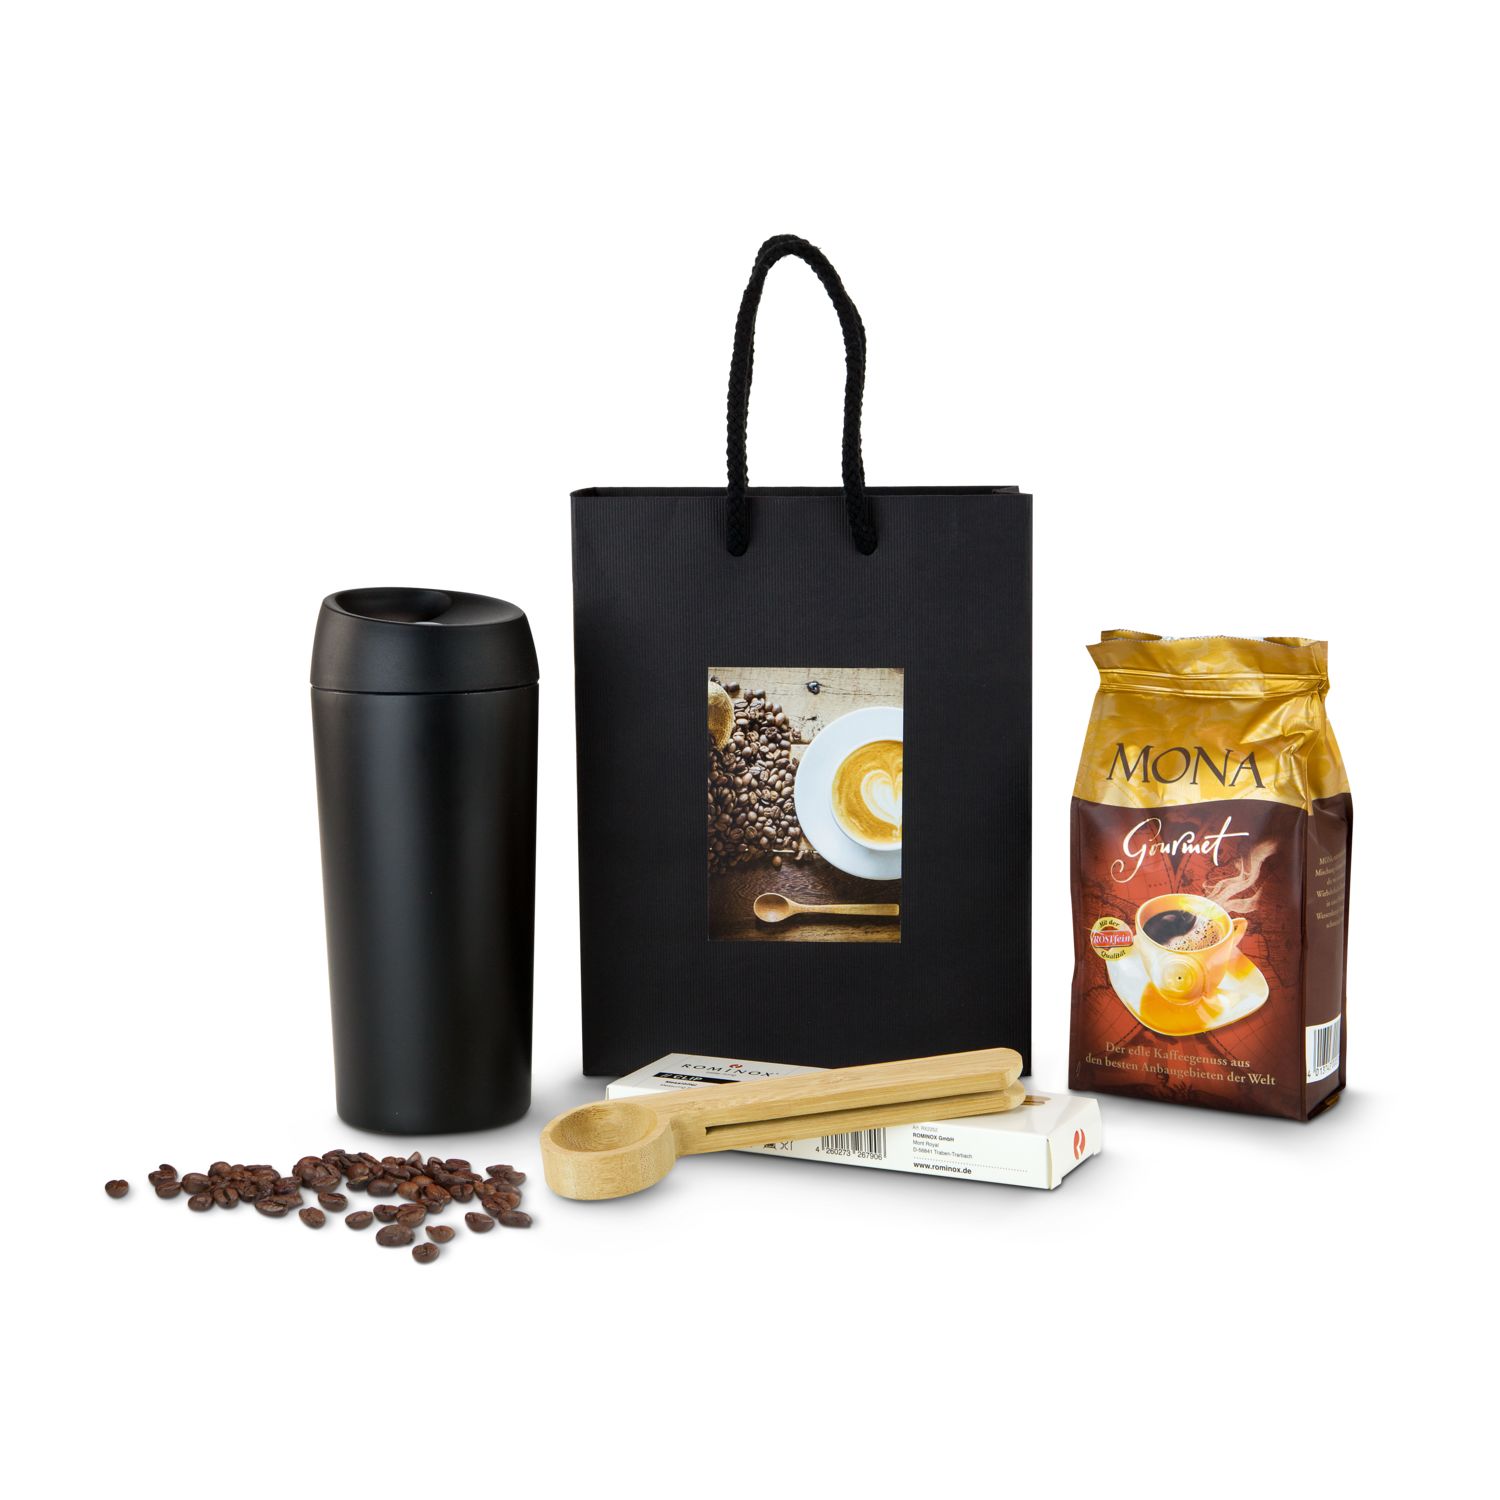 Geschenkset / Präsenteset: Kaffee Deluxe 2K2018